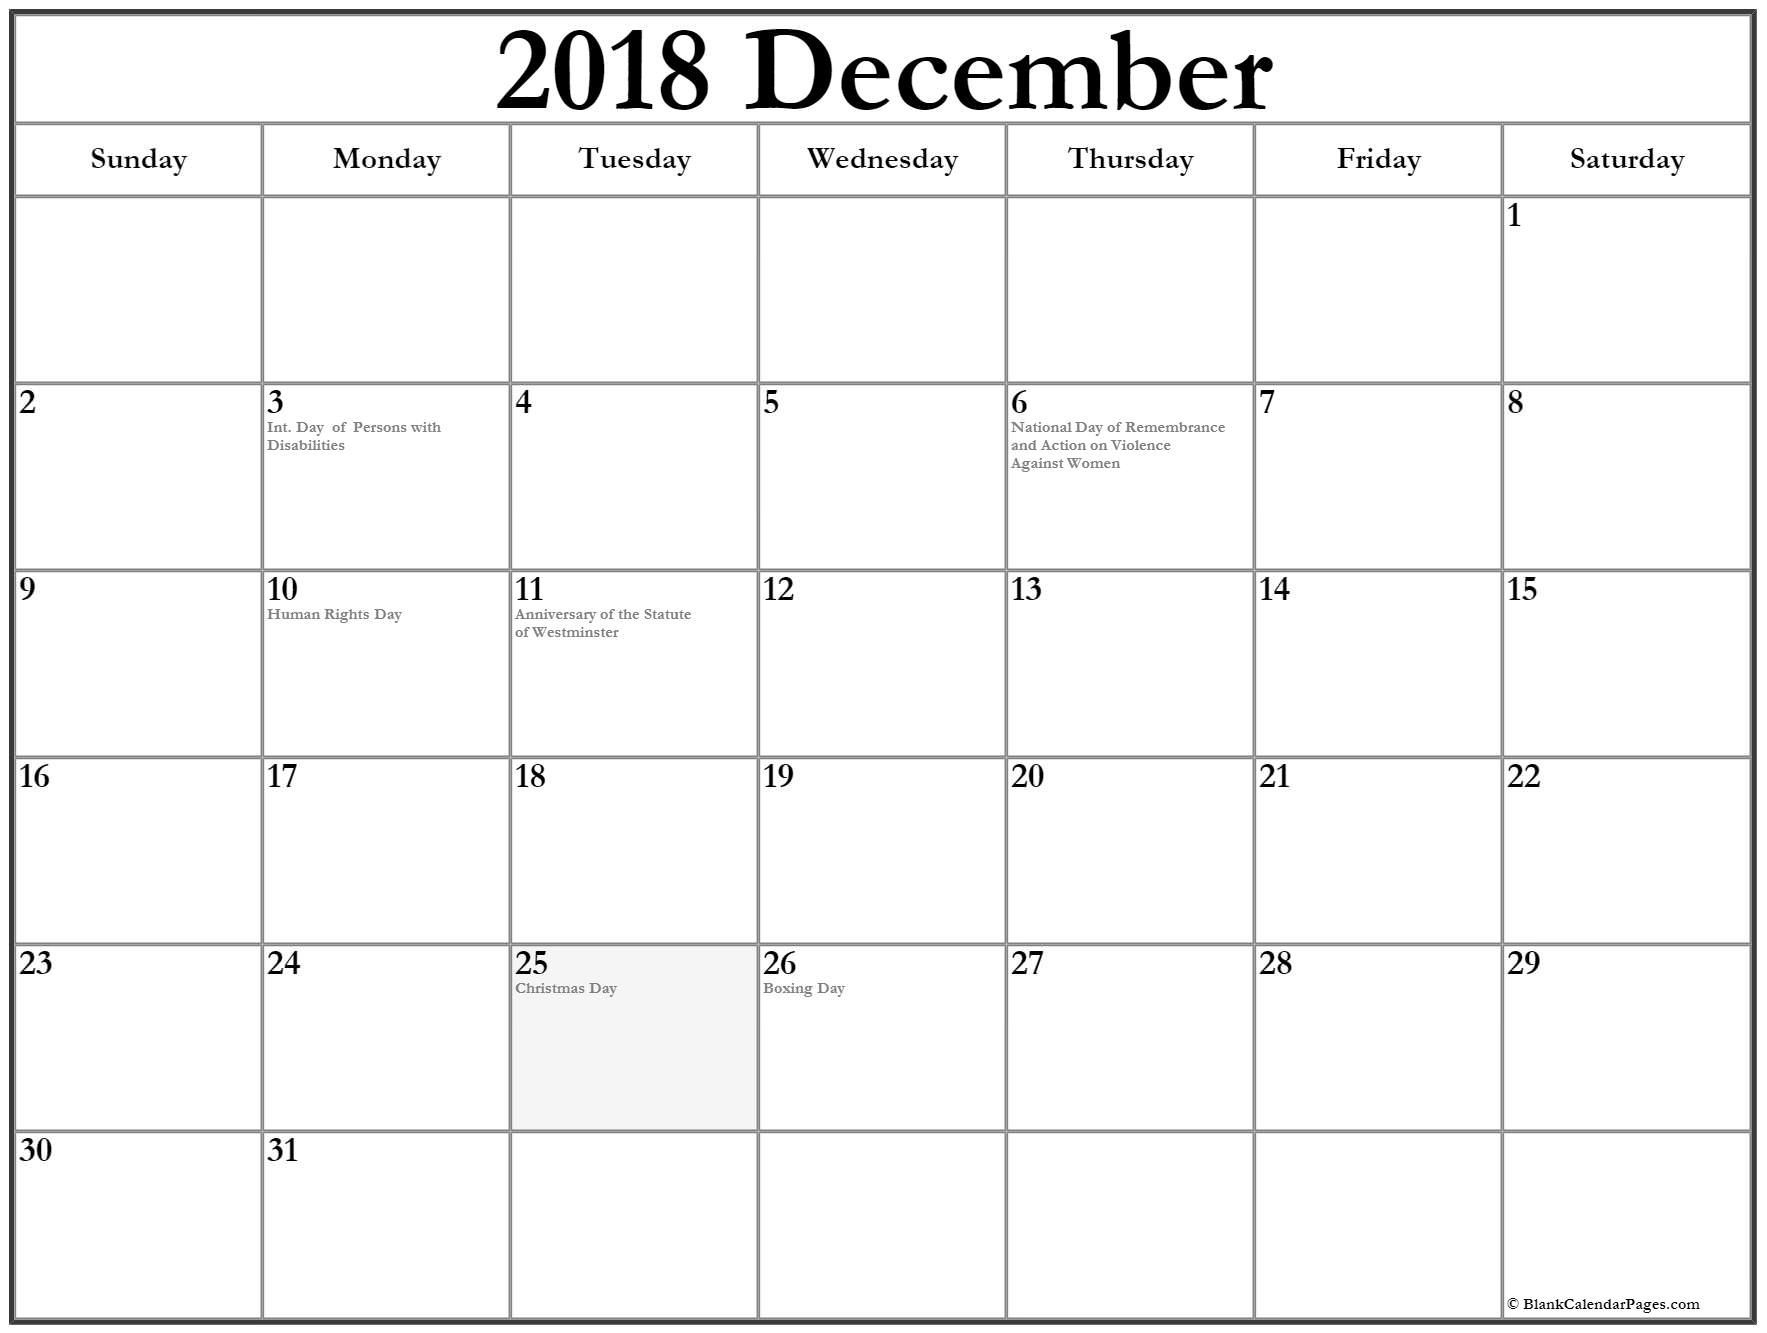 December 2018 Canadian Calendar | Holiday Calendar, 2018 Holiday Calendar, Canadian Calendar Daily Calendar December 2021